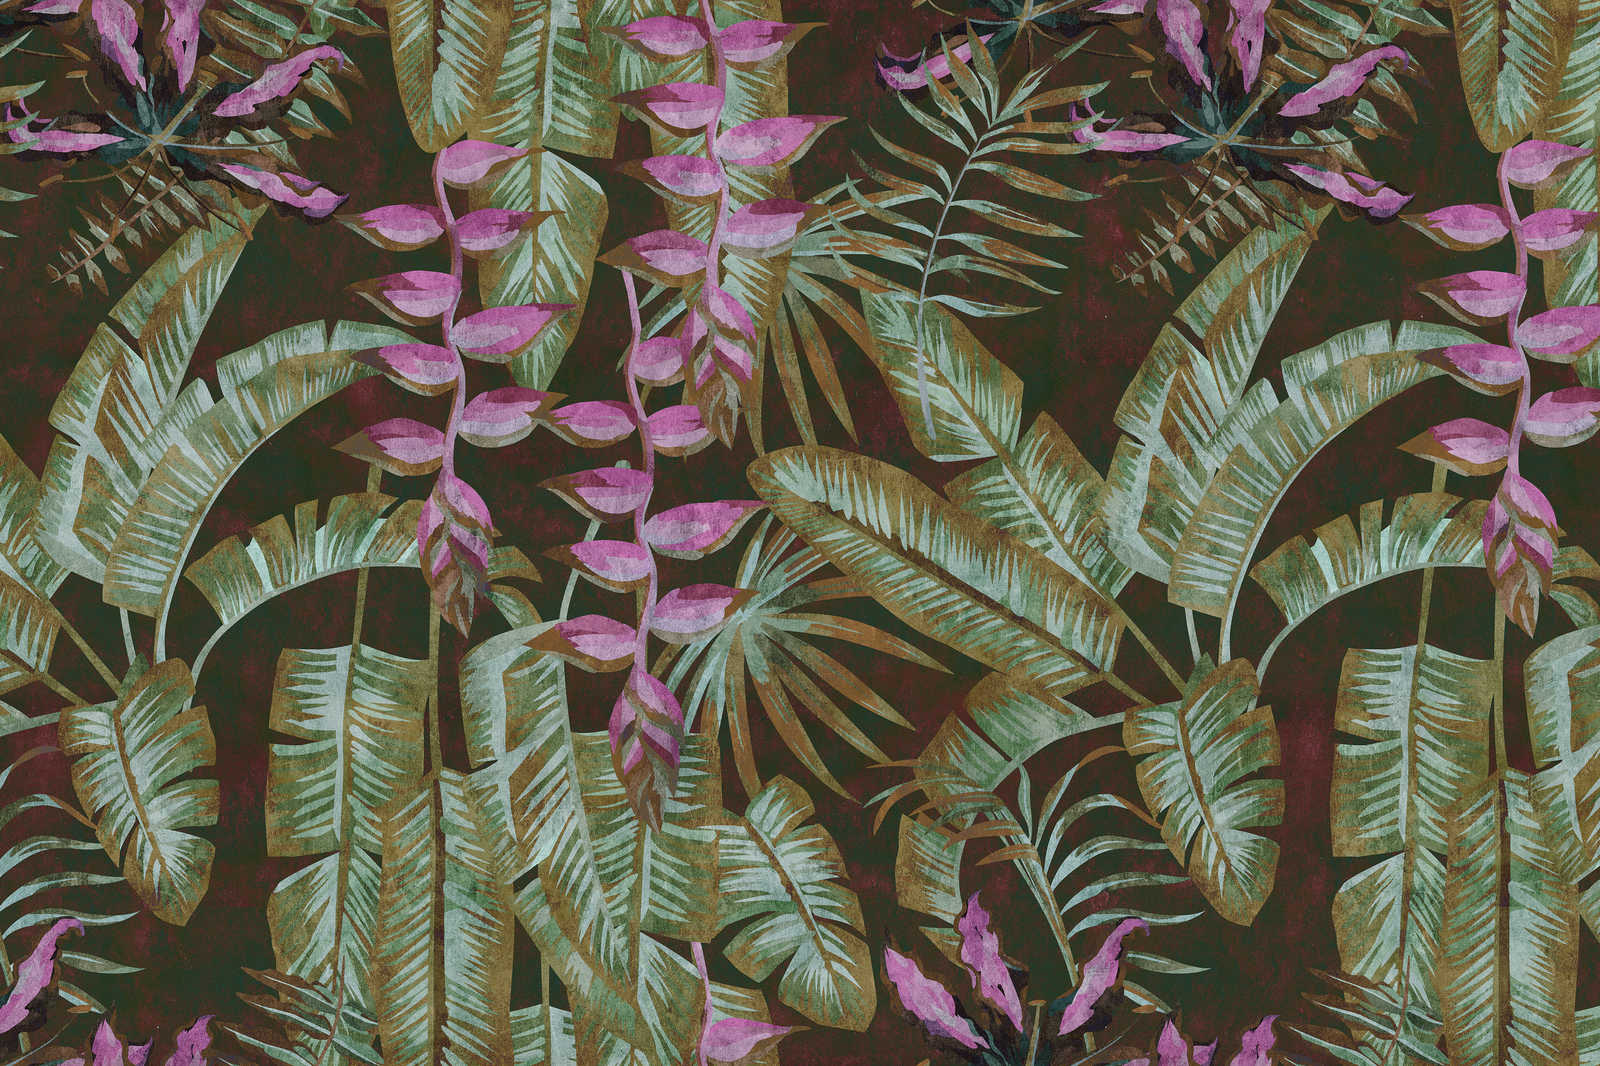             Tropicana 1 - Dschungel Leinwandbild mit Bananenblättern & Farnen – 1,20 m x 0,80 m
        